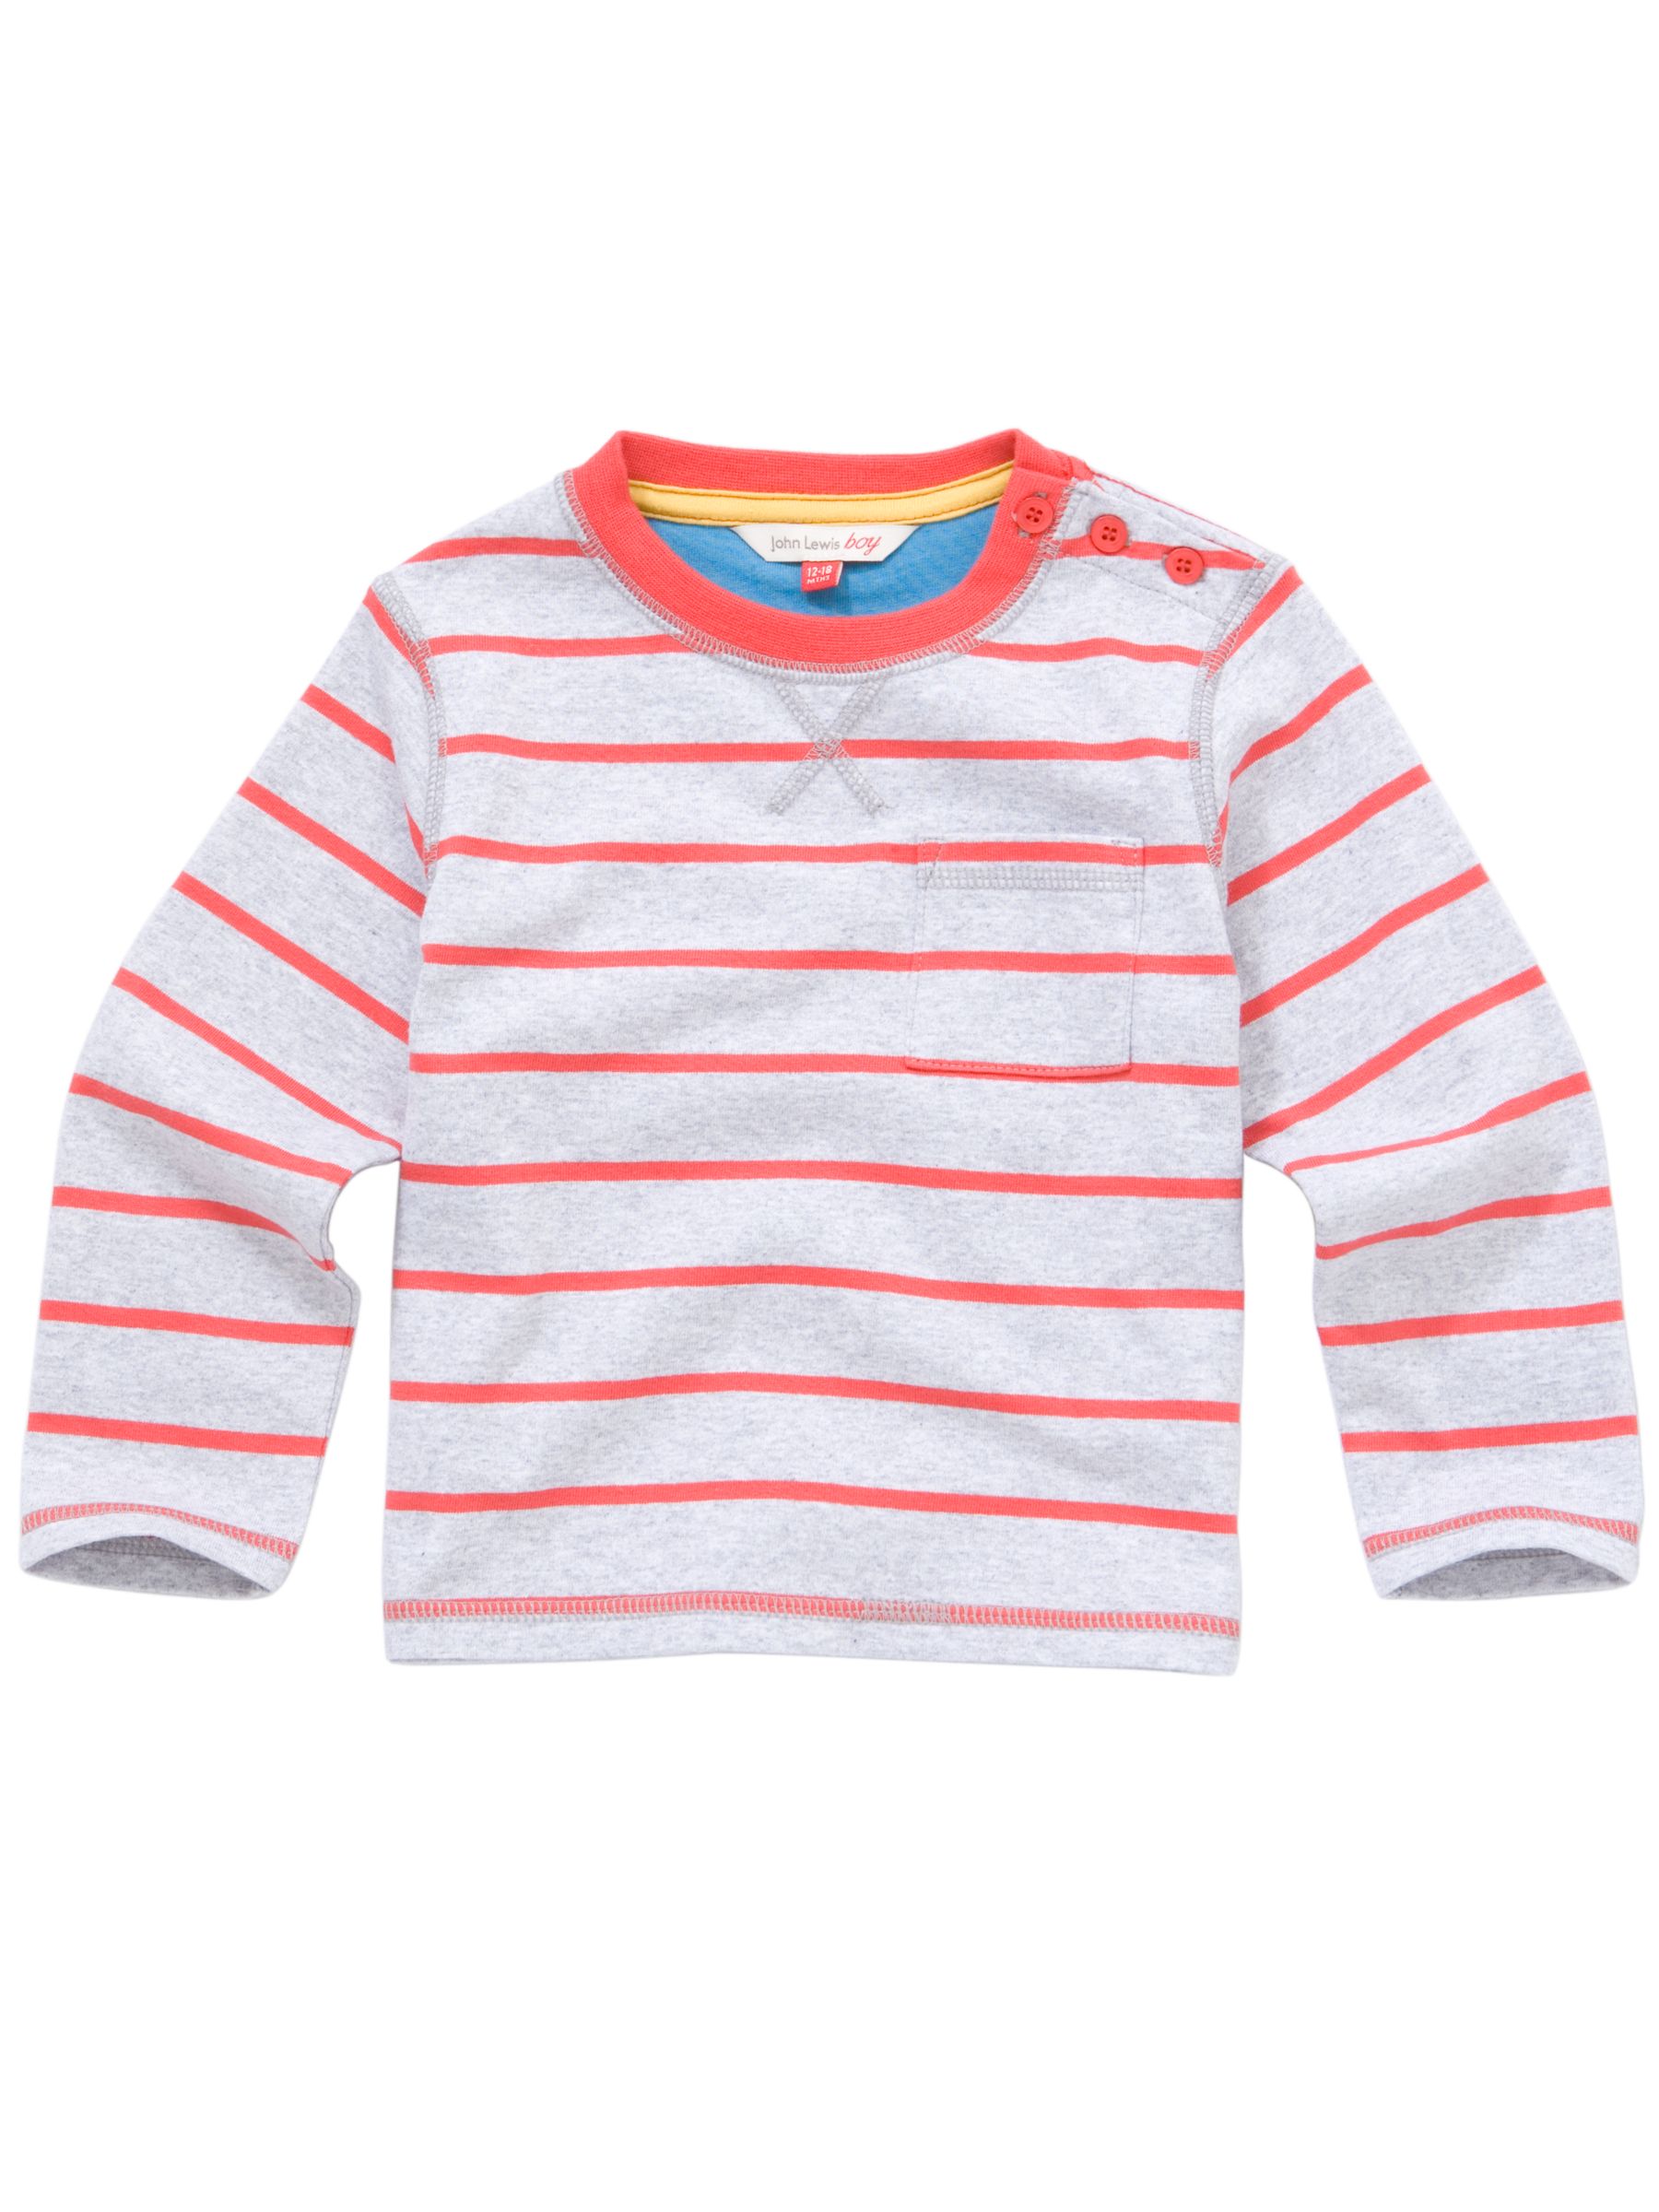 John Lewis Boy Stripe Print T-Shirt, Red/grey